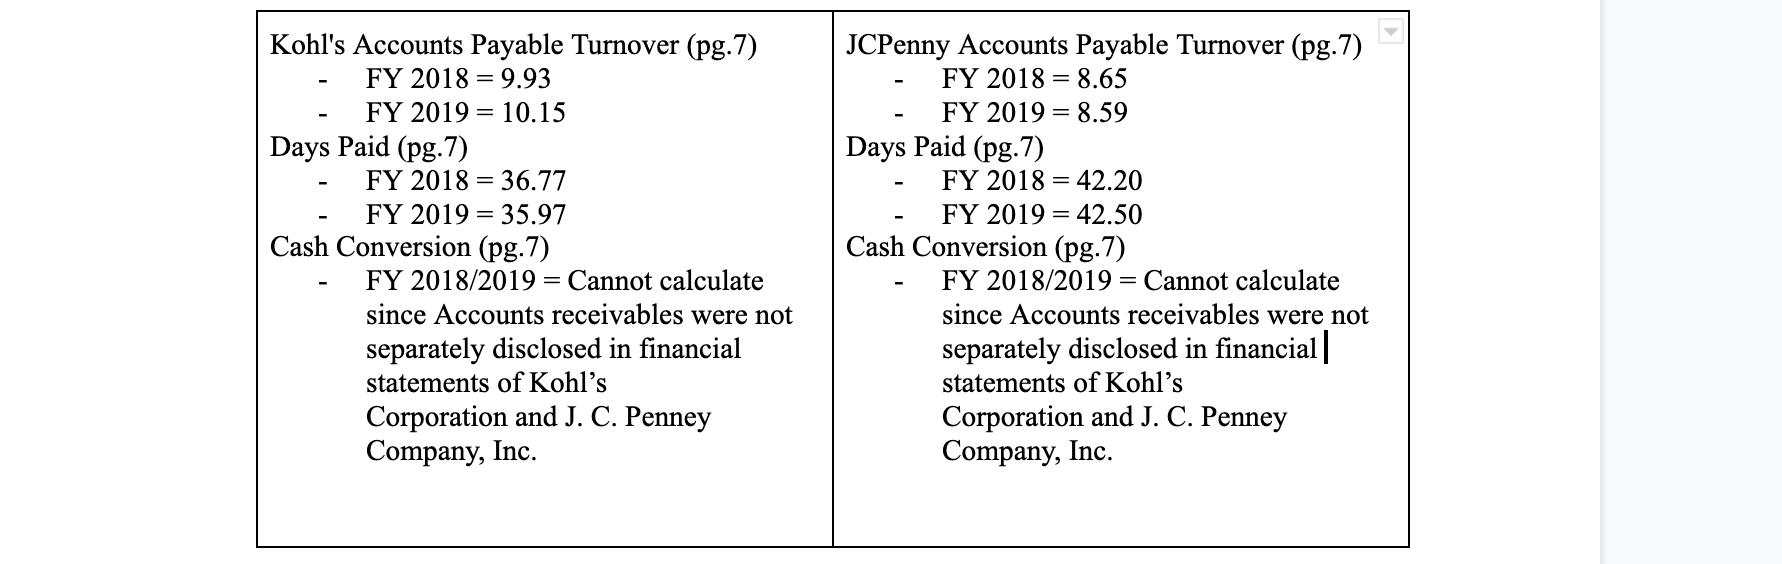 Kohls Accounts Payable Turnover (pg.7)FY 2018 = 9.93FY 2019 = 10.15Days Paid (pg.7)FY 2018 = 36.77FY 2019 = 35.97Cash